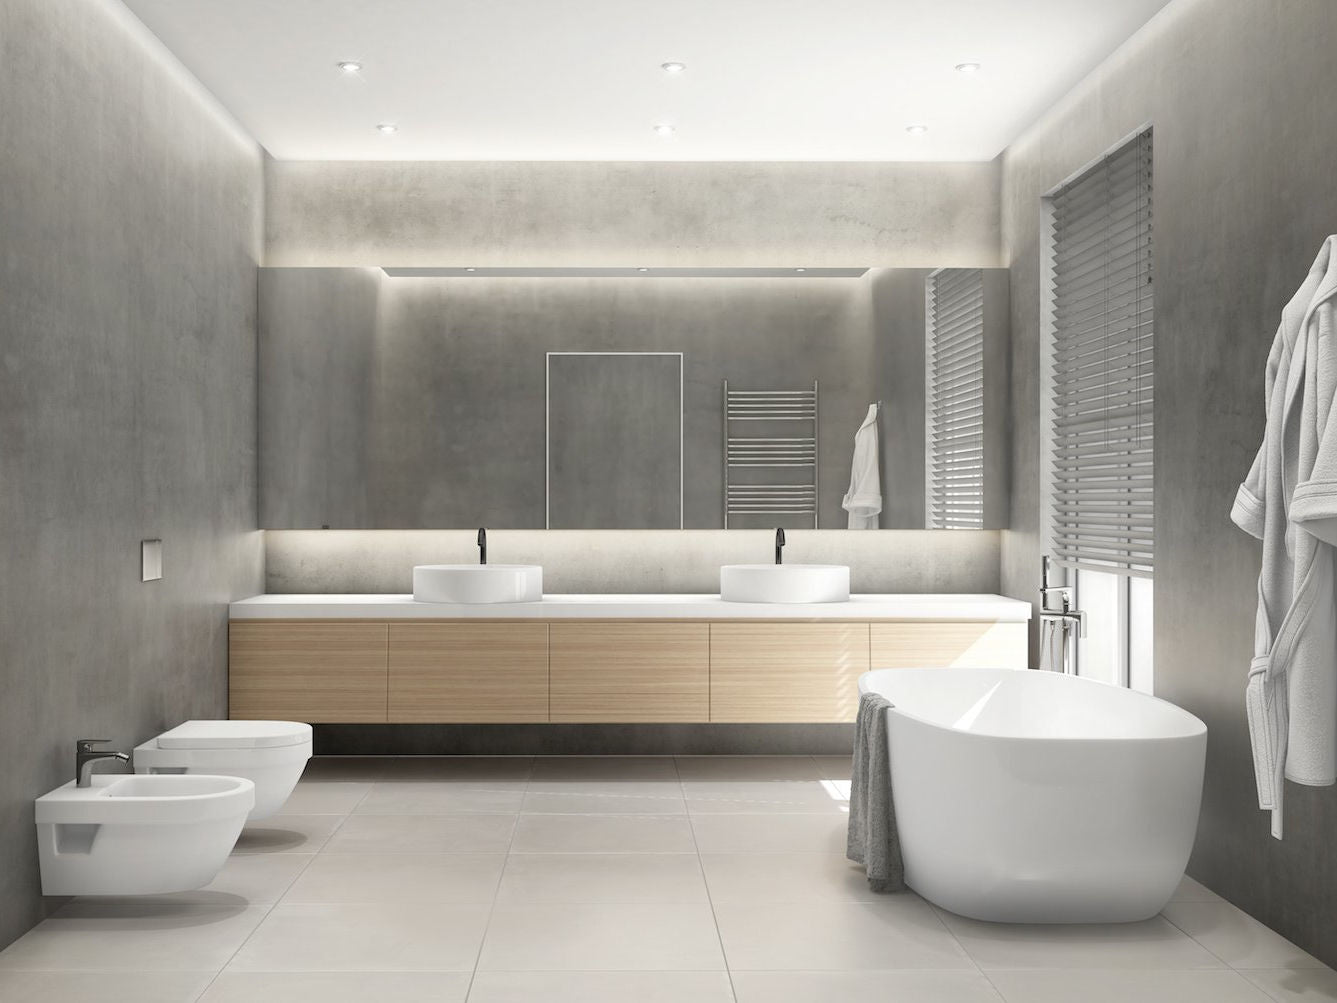 Discover 133+ contemporary bathroom suites